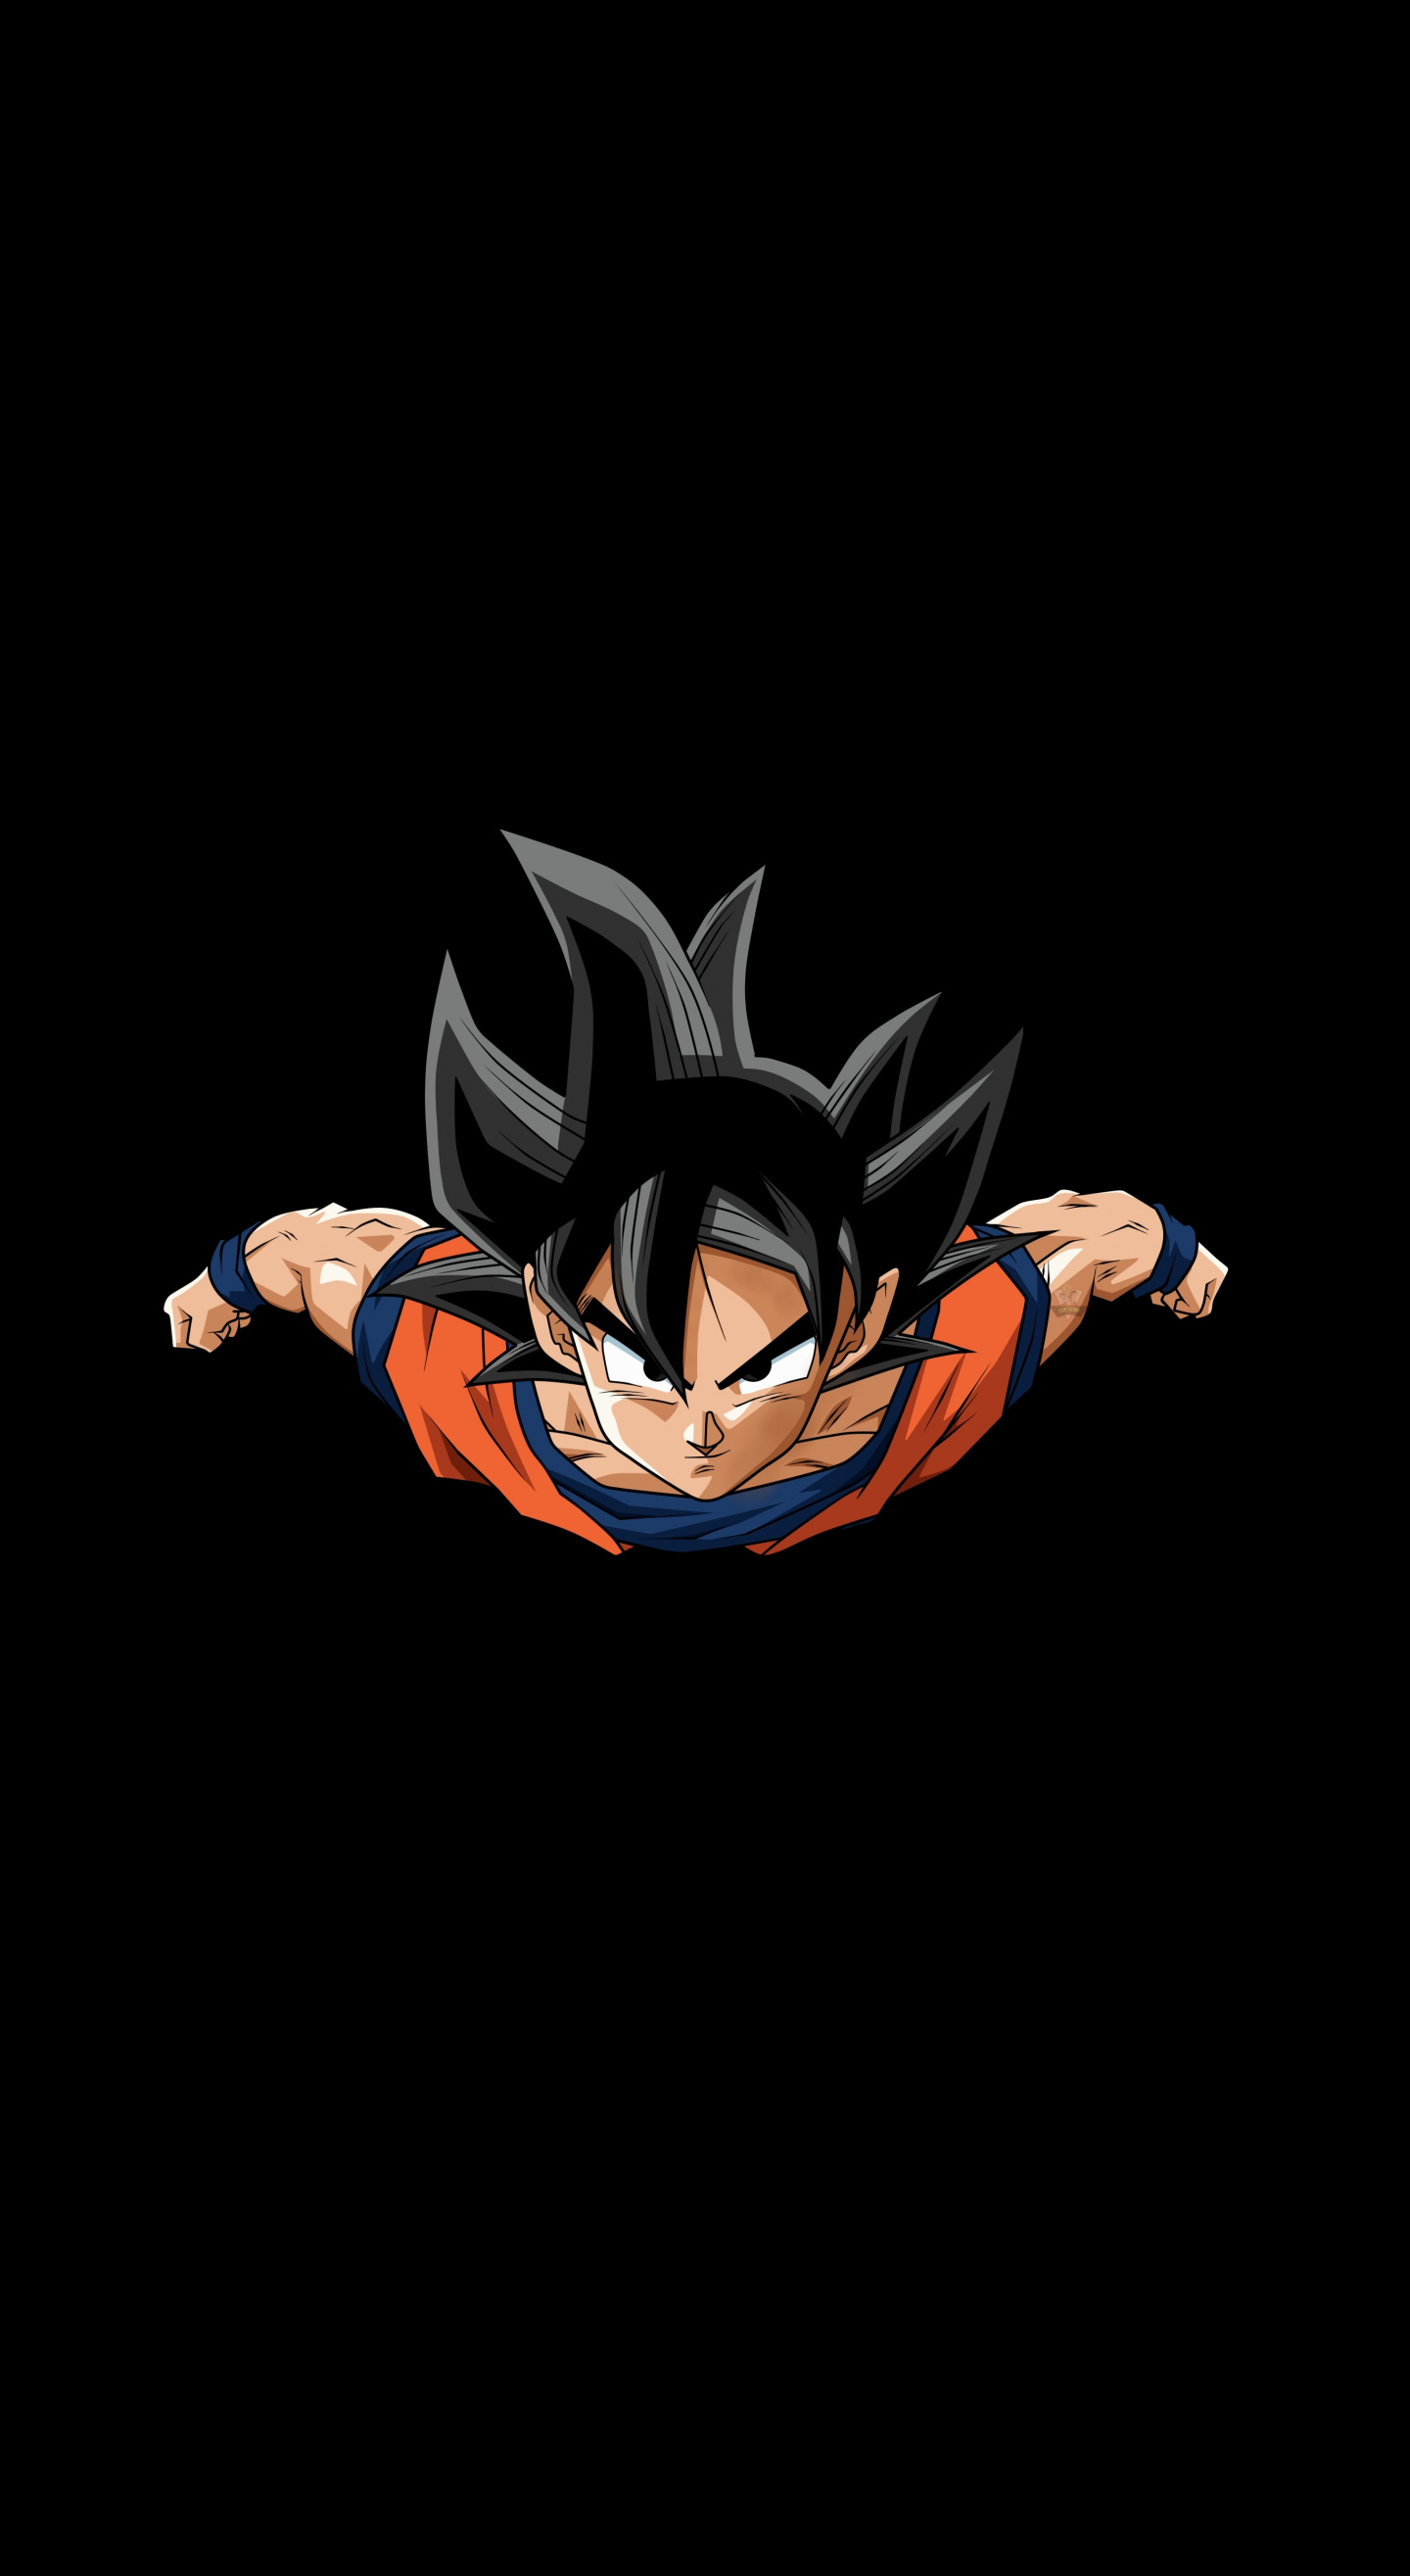 Download Goku, anime boy, jump, artwork wallpaper, 1440x Samsung Galaxy Note 8